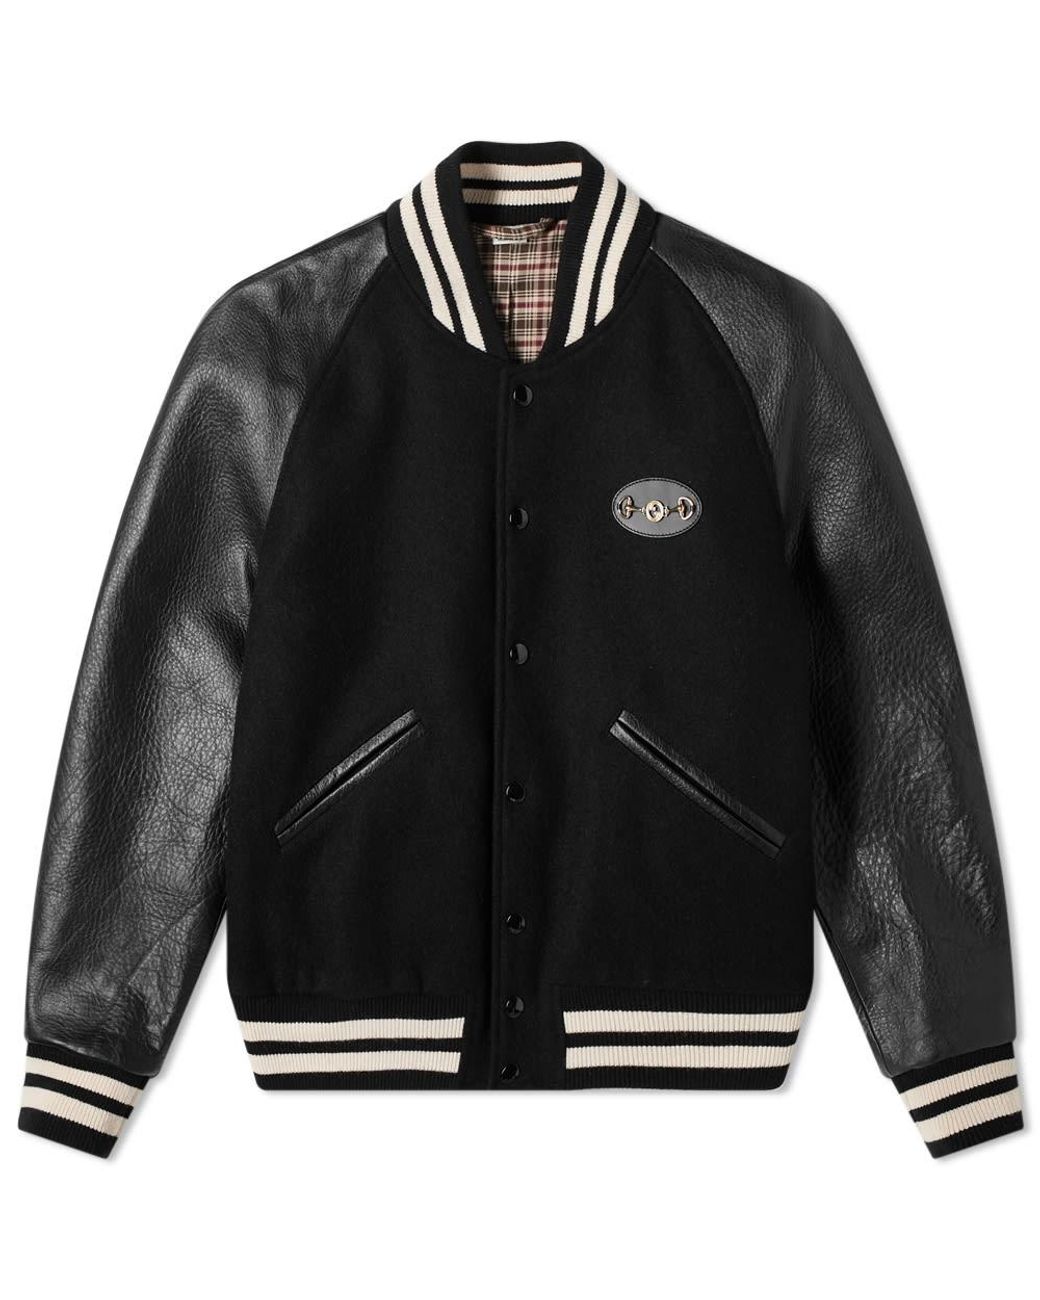 Item 123348: Gucci, Varsity Jacket, Black & Cream, L